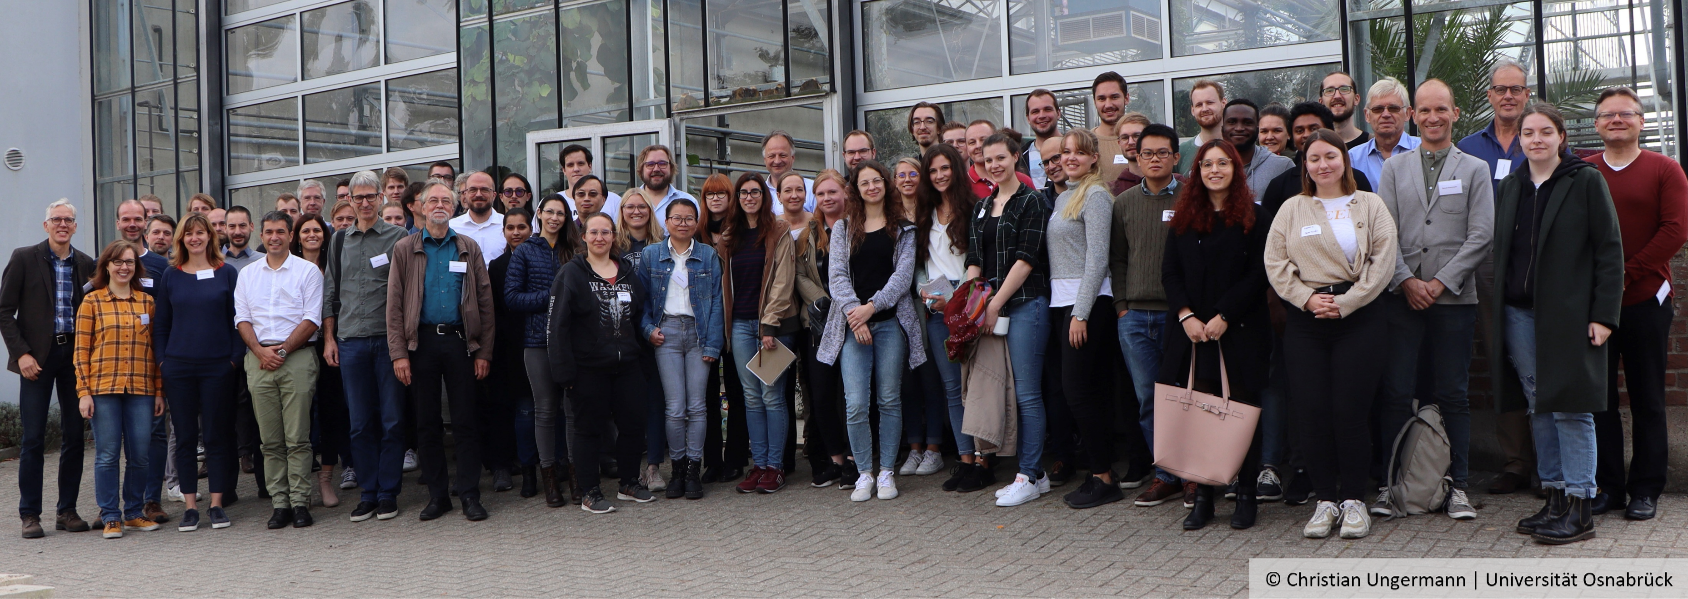 The participants of the SFB Symposium, © Christian Ungermann | Universität Osnabrück